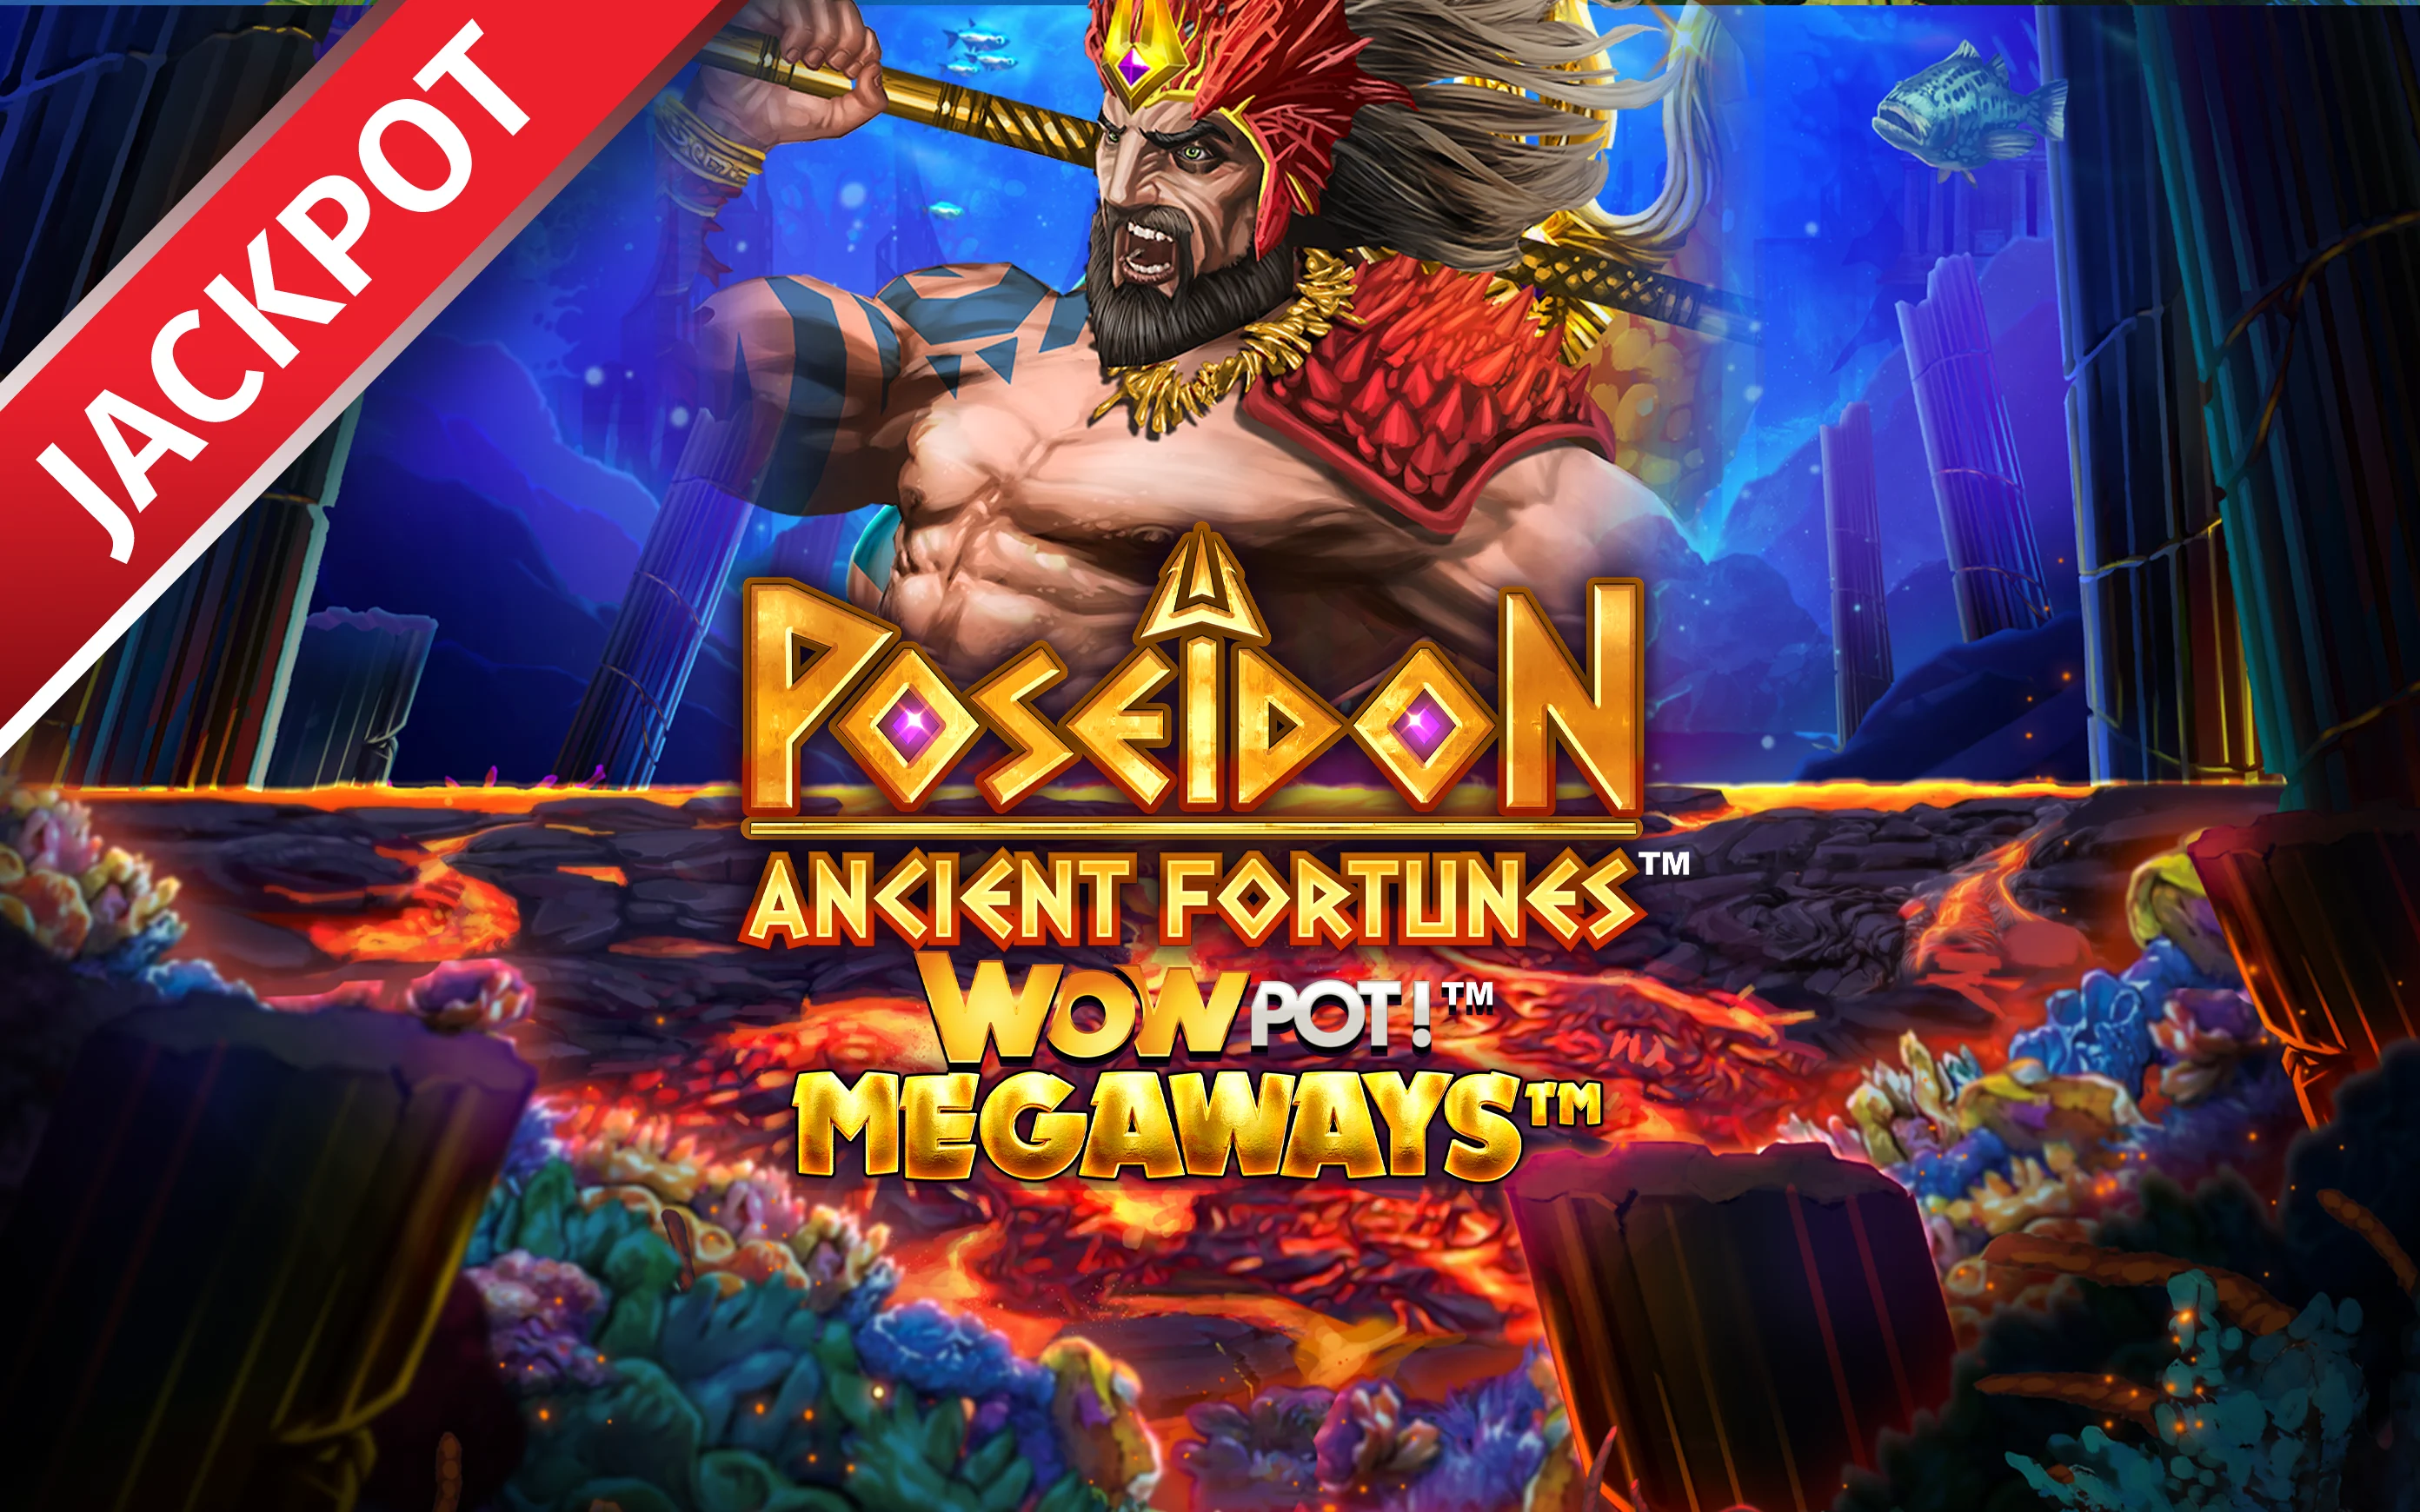 Jogue Ancient Fortunes: Poseidon™ WowPot! MEGAWAYS™ no casino online Starcasino.be 